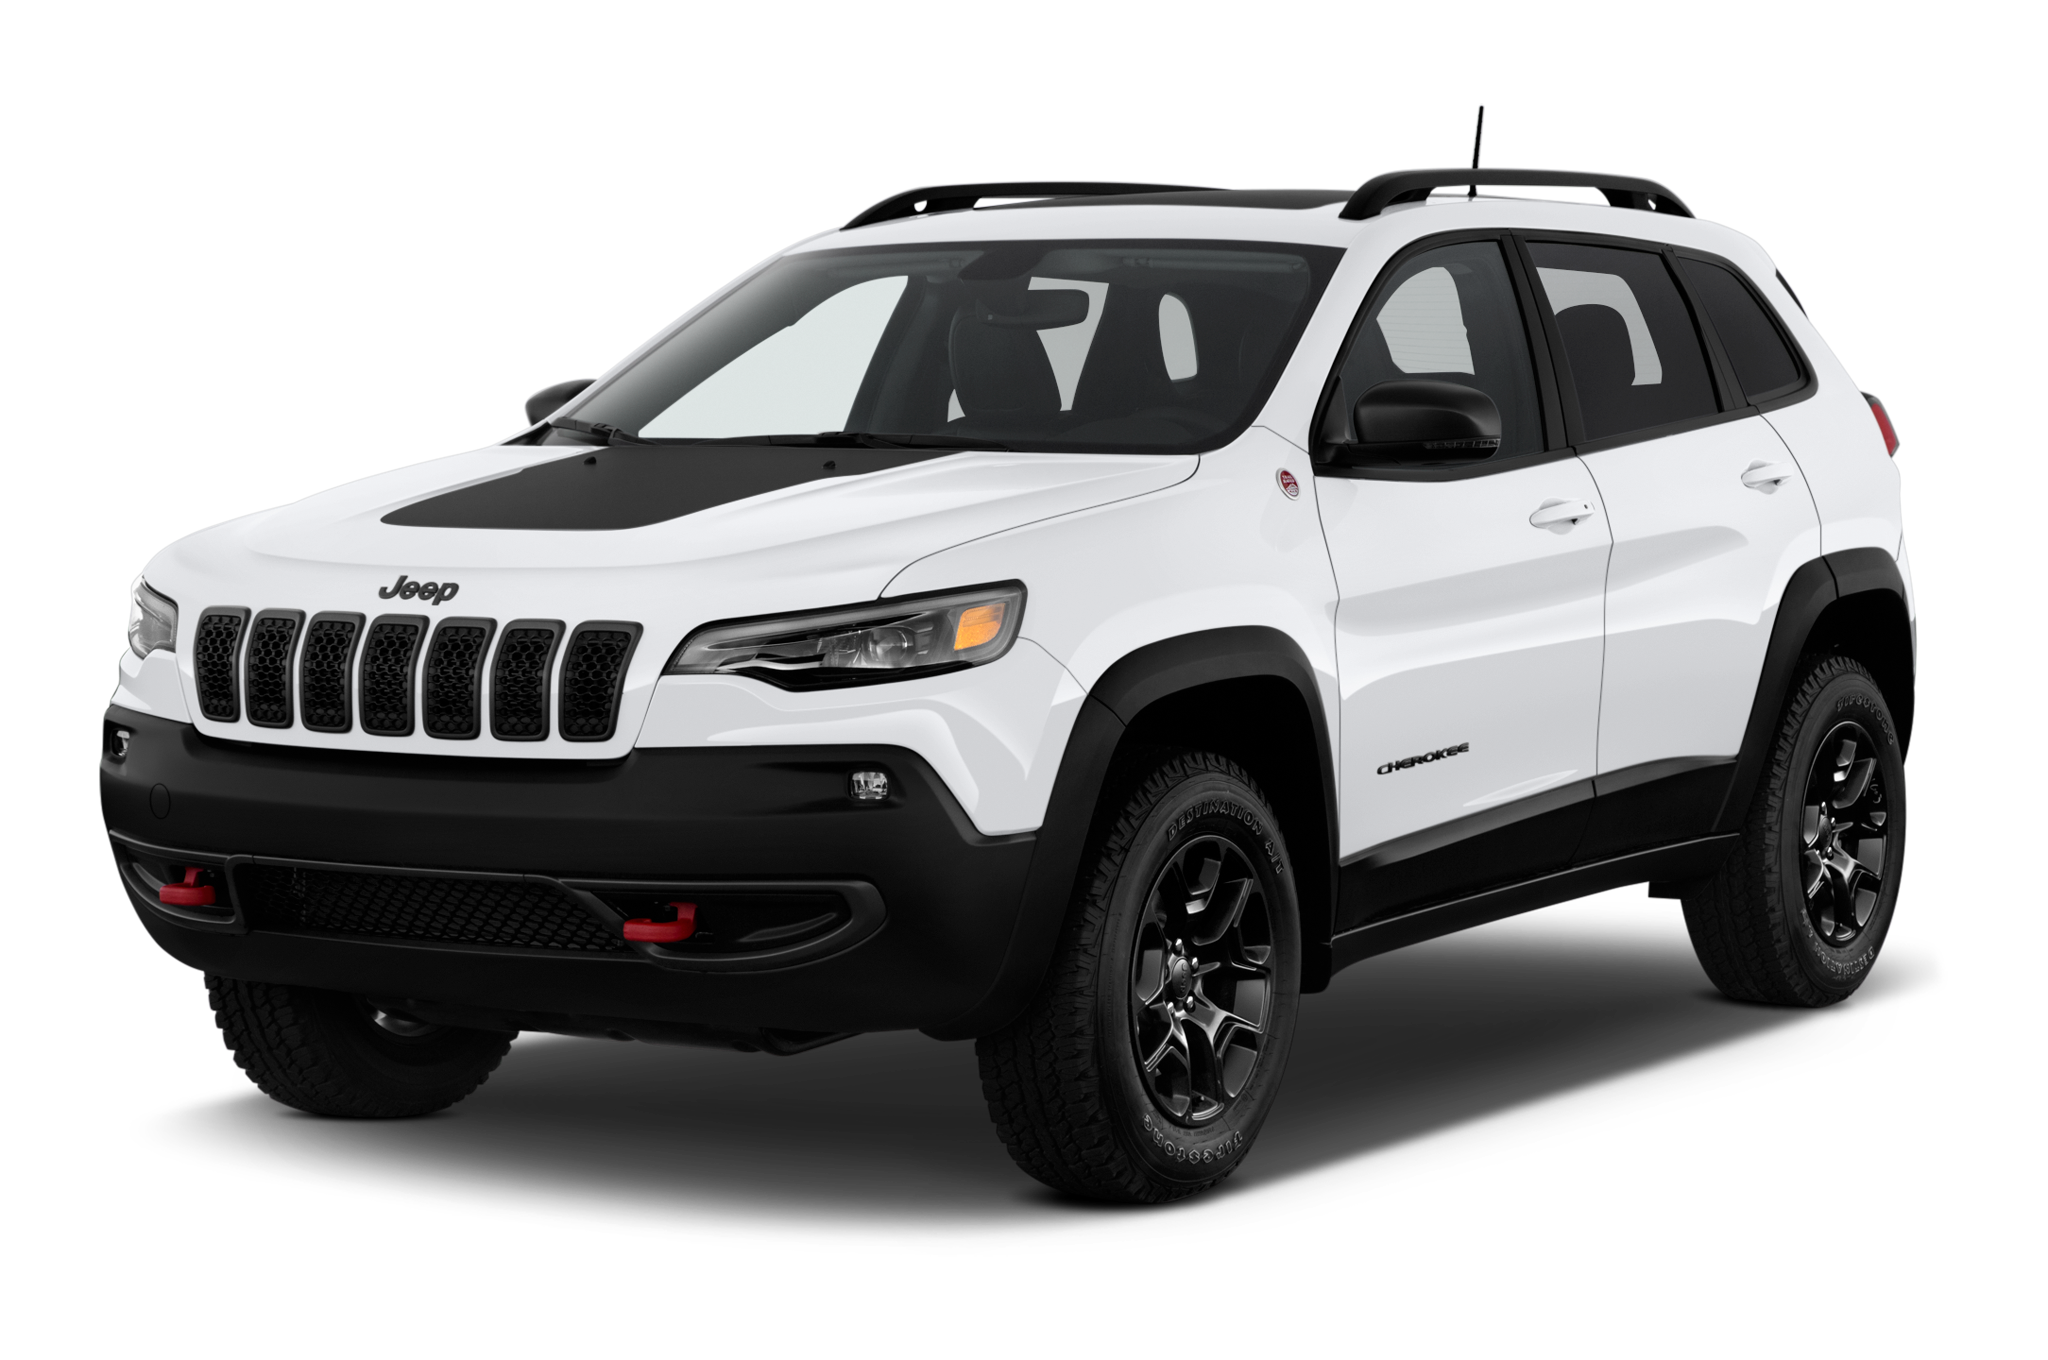 Jeep cherokee trailhawk. Jeep Cherokee 4x4. Jeep Cherokee Trailhawk 4x4. Jeep Cherokee Trailhawk 2020. 2020 Jeep Cherokee Trailhawk 4x4.